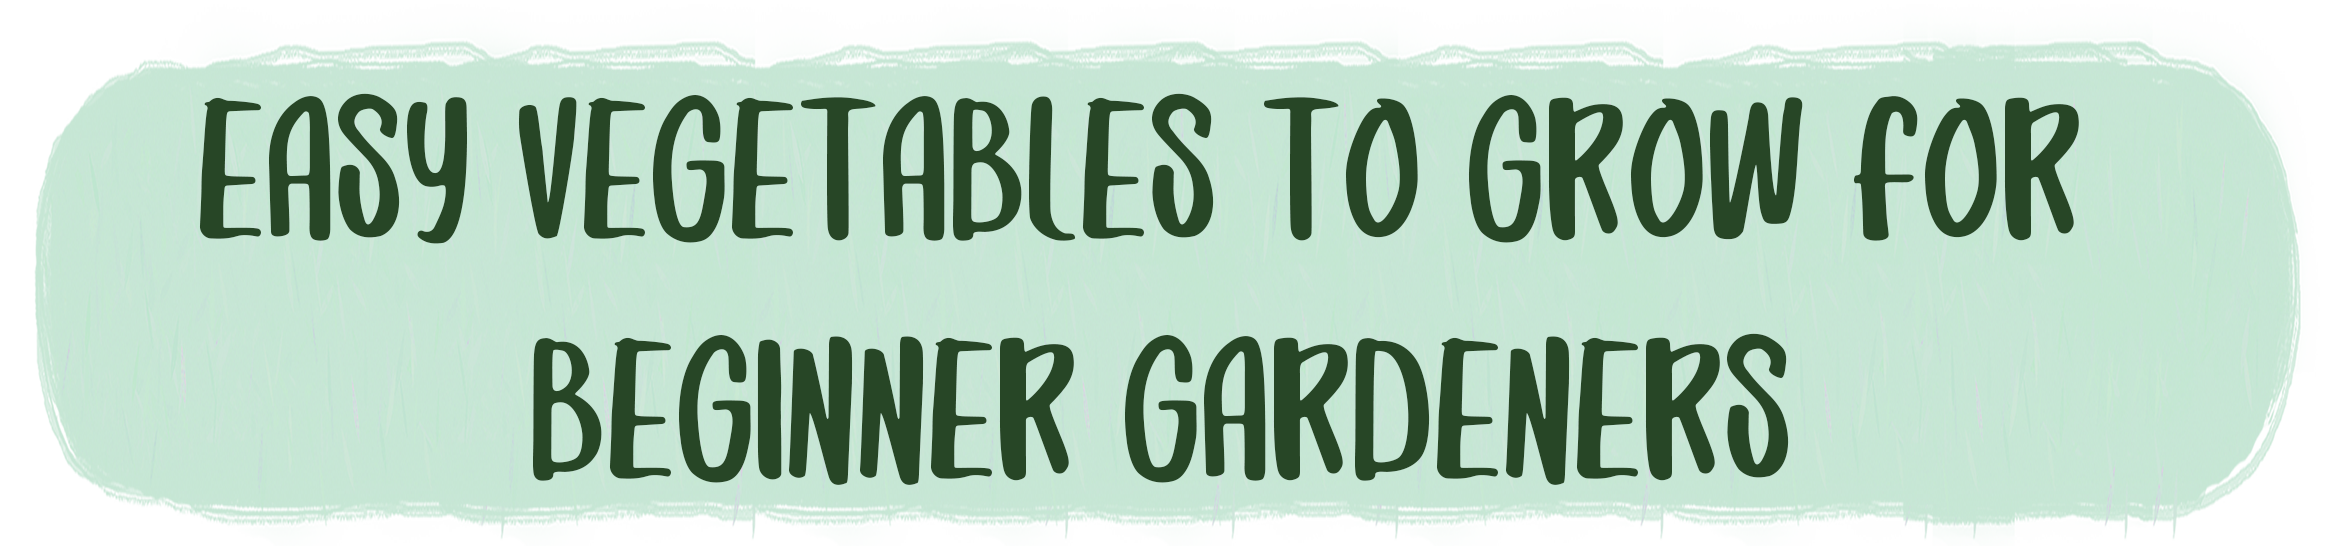 488-easy-vegetables-to-grow-for-beginner-gardeners-1681612658665.png